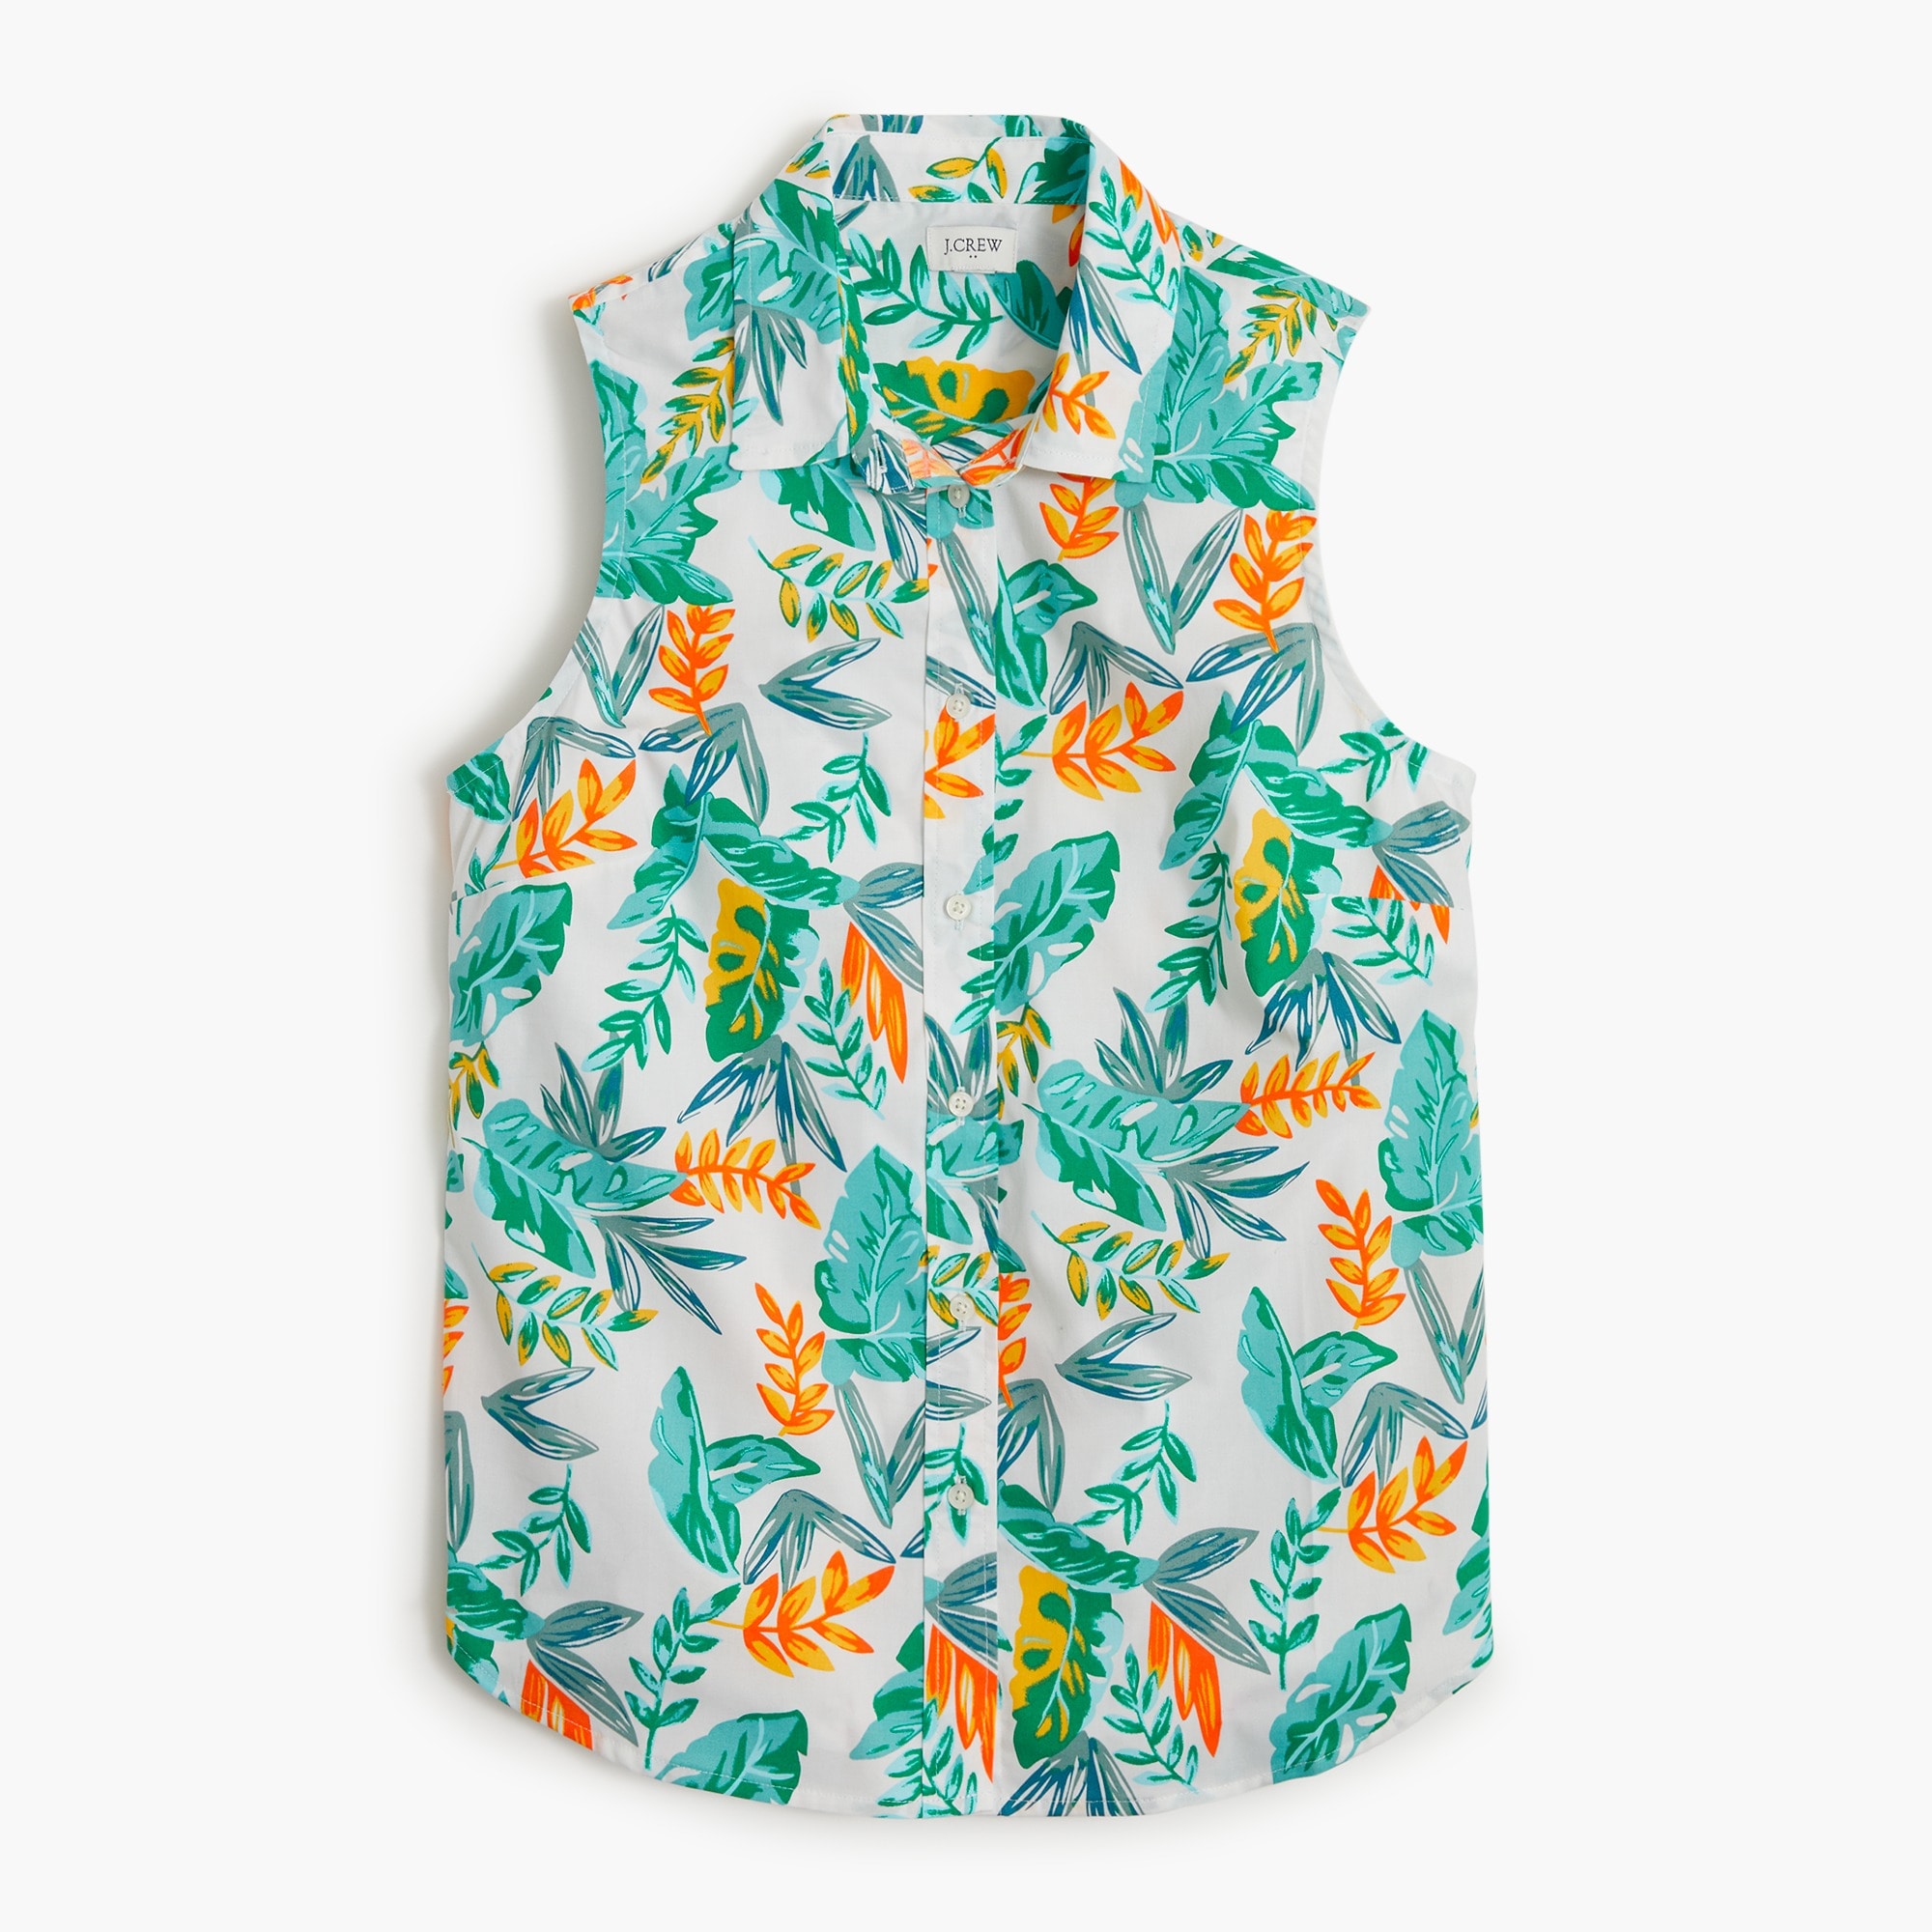  Sleeveless pineapple cotton poplin shirt in signature fit